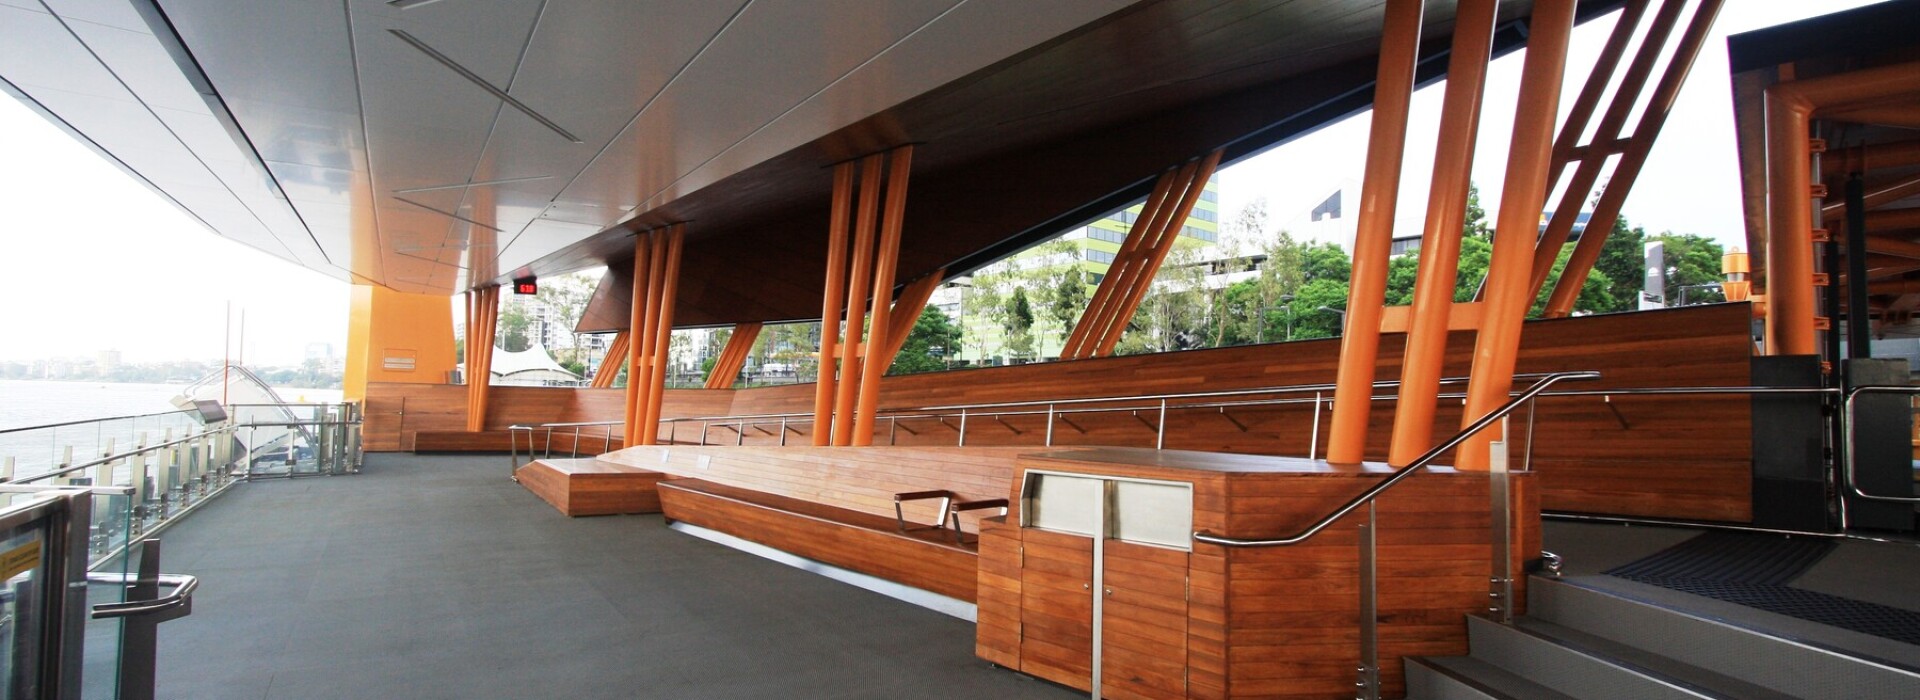 Brisbane River Ferry Terminals